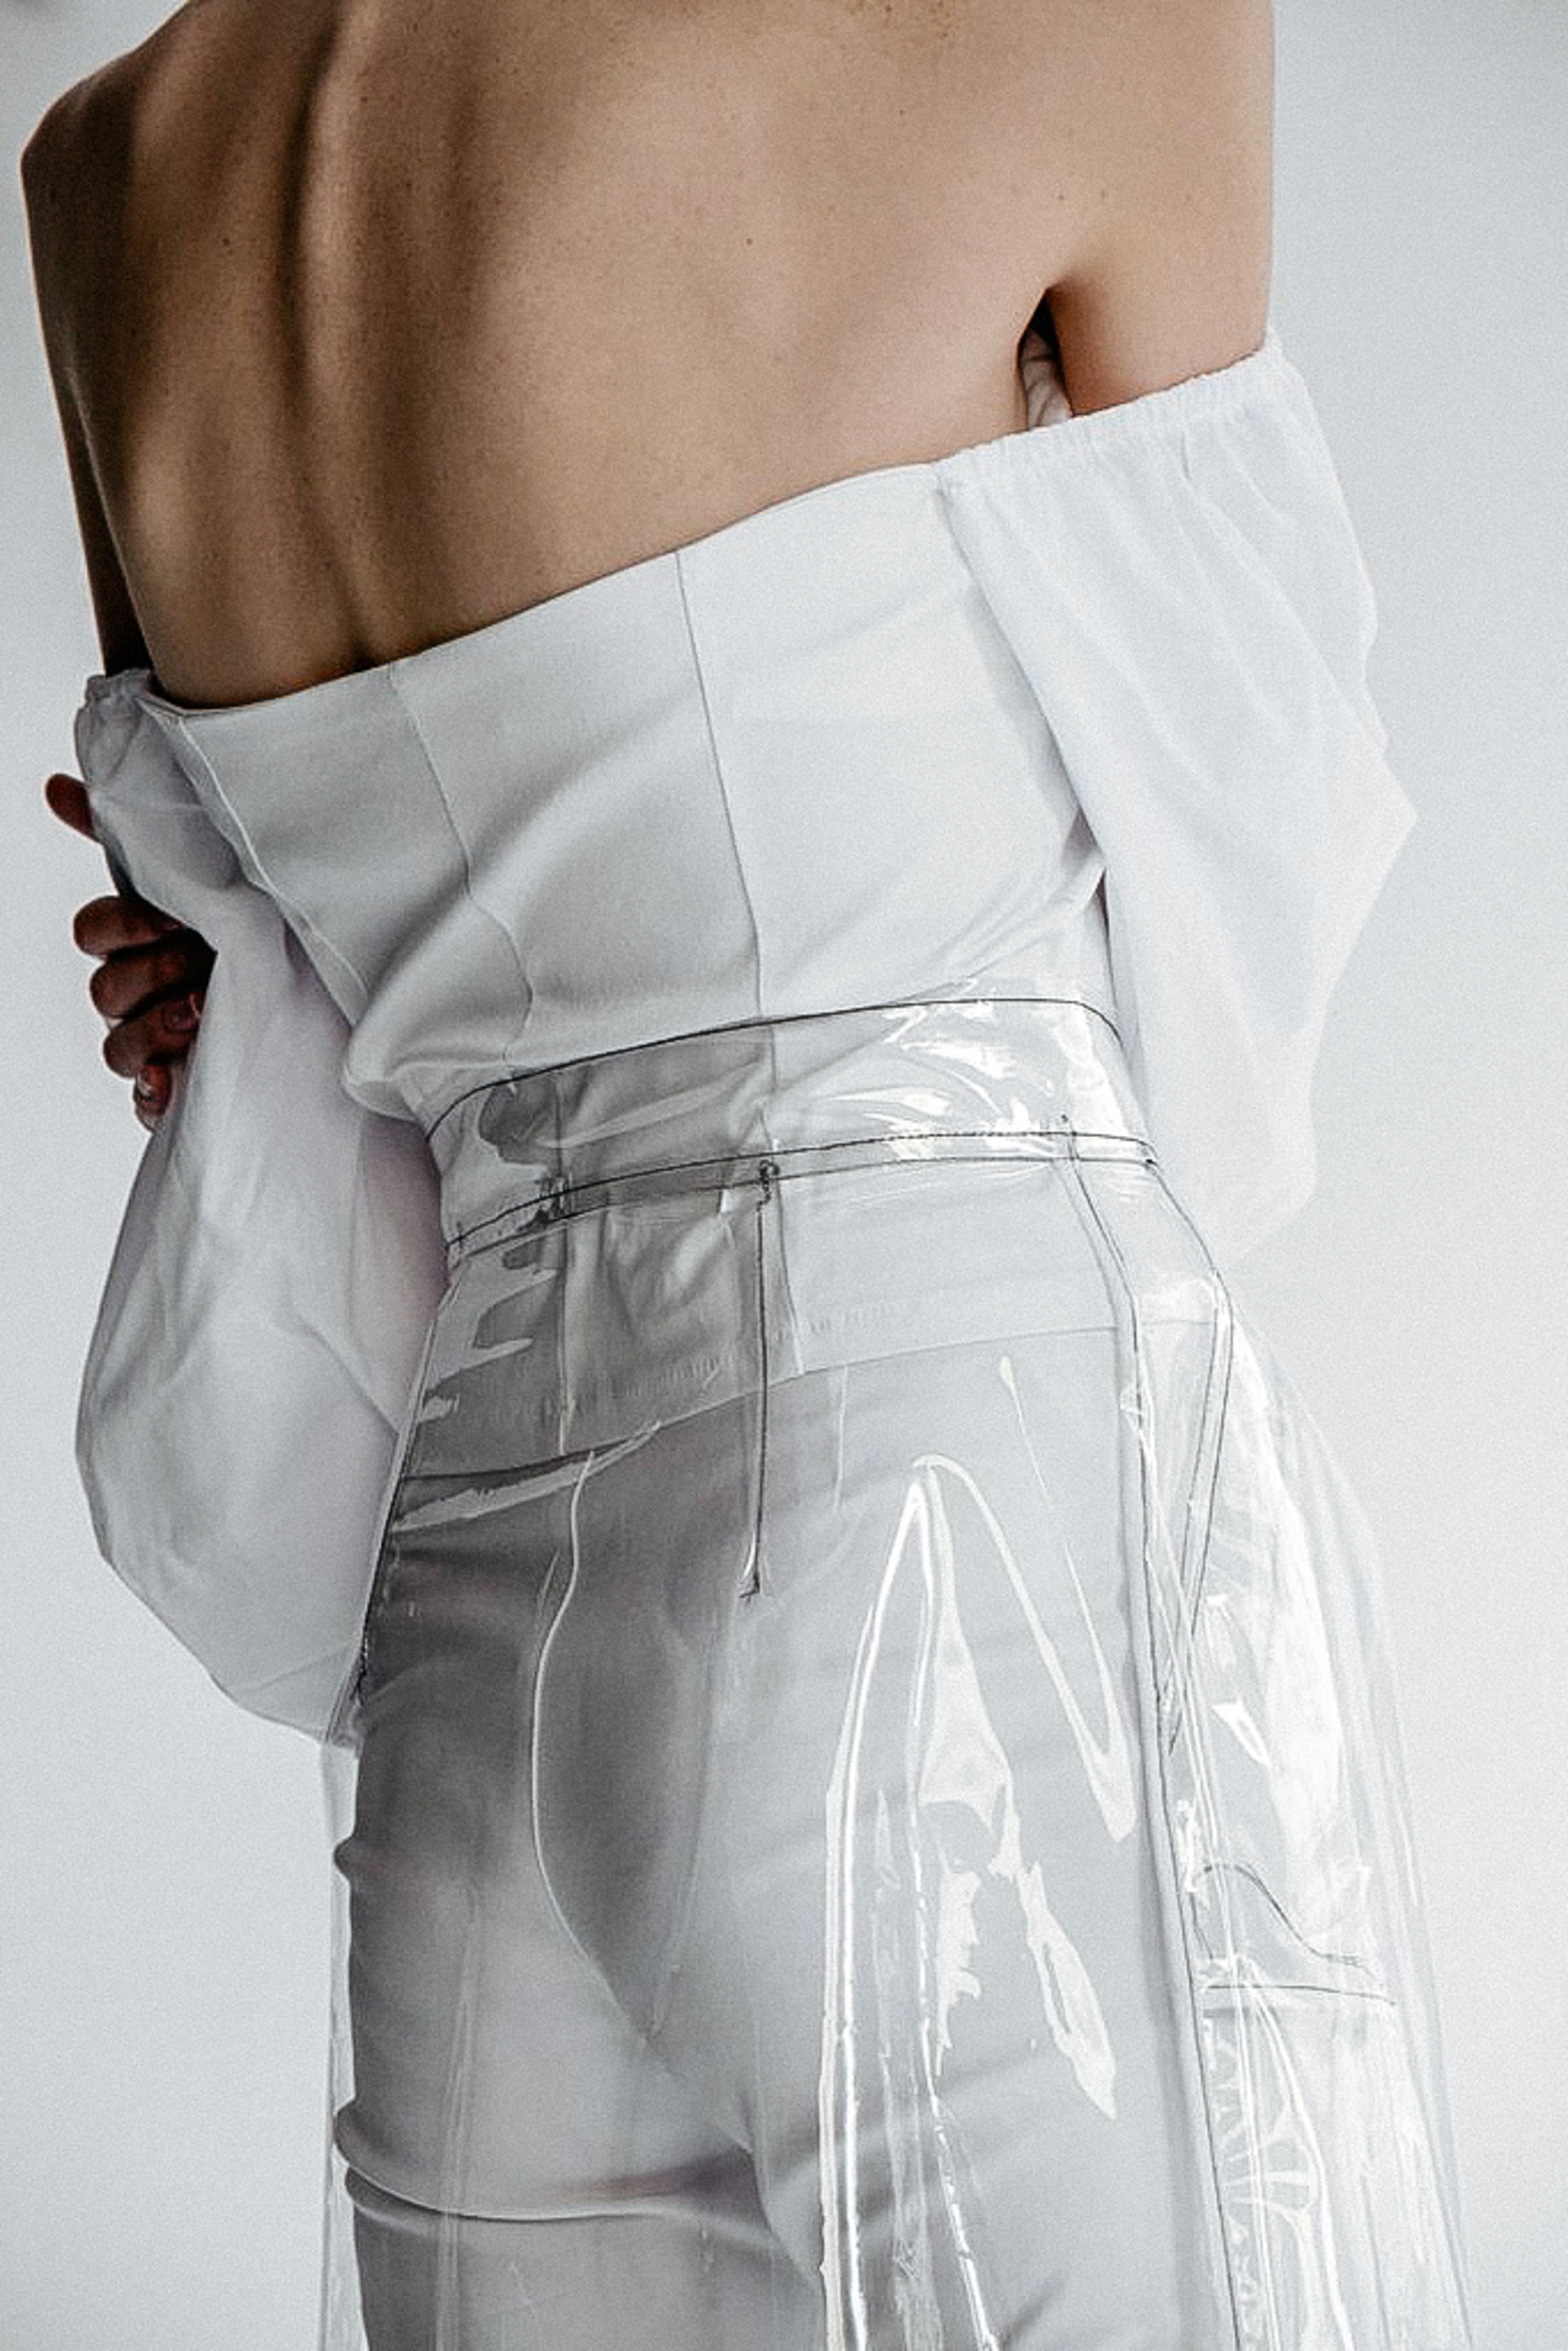 The Loeil plastic clear transparent skirt